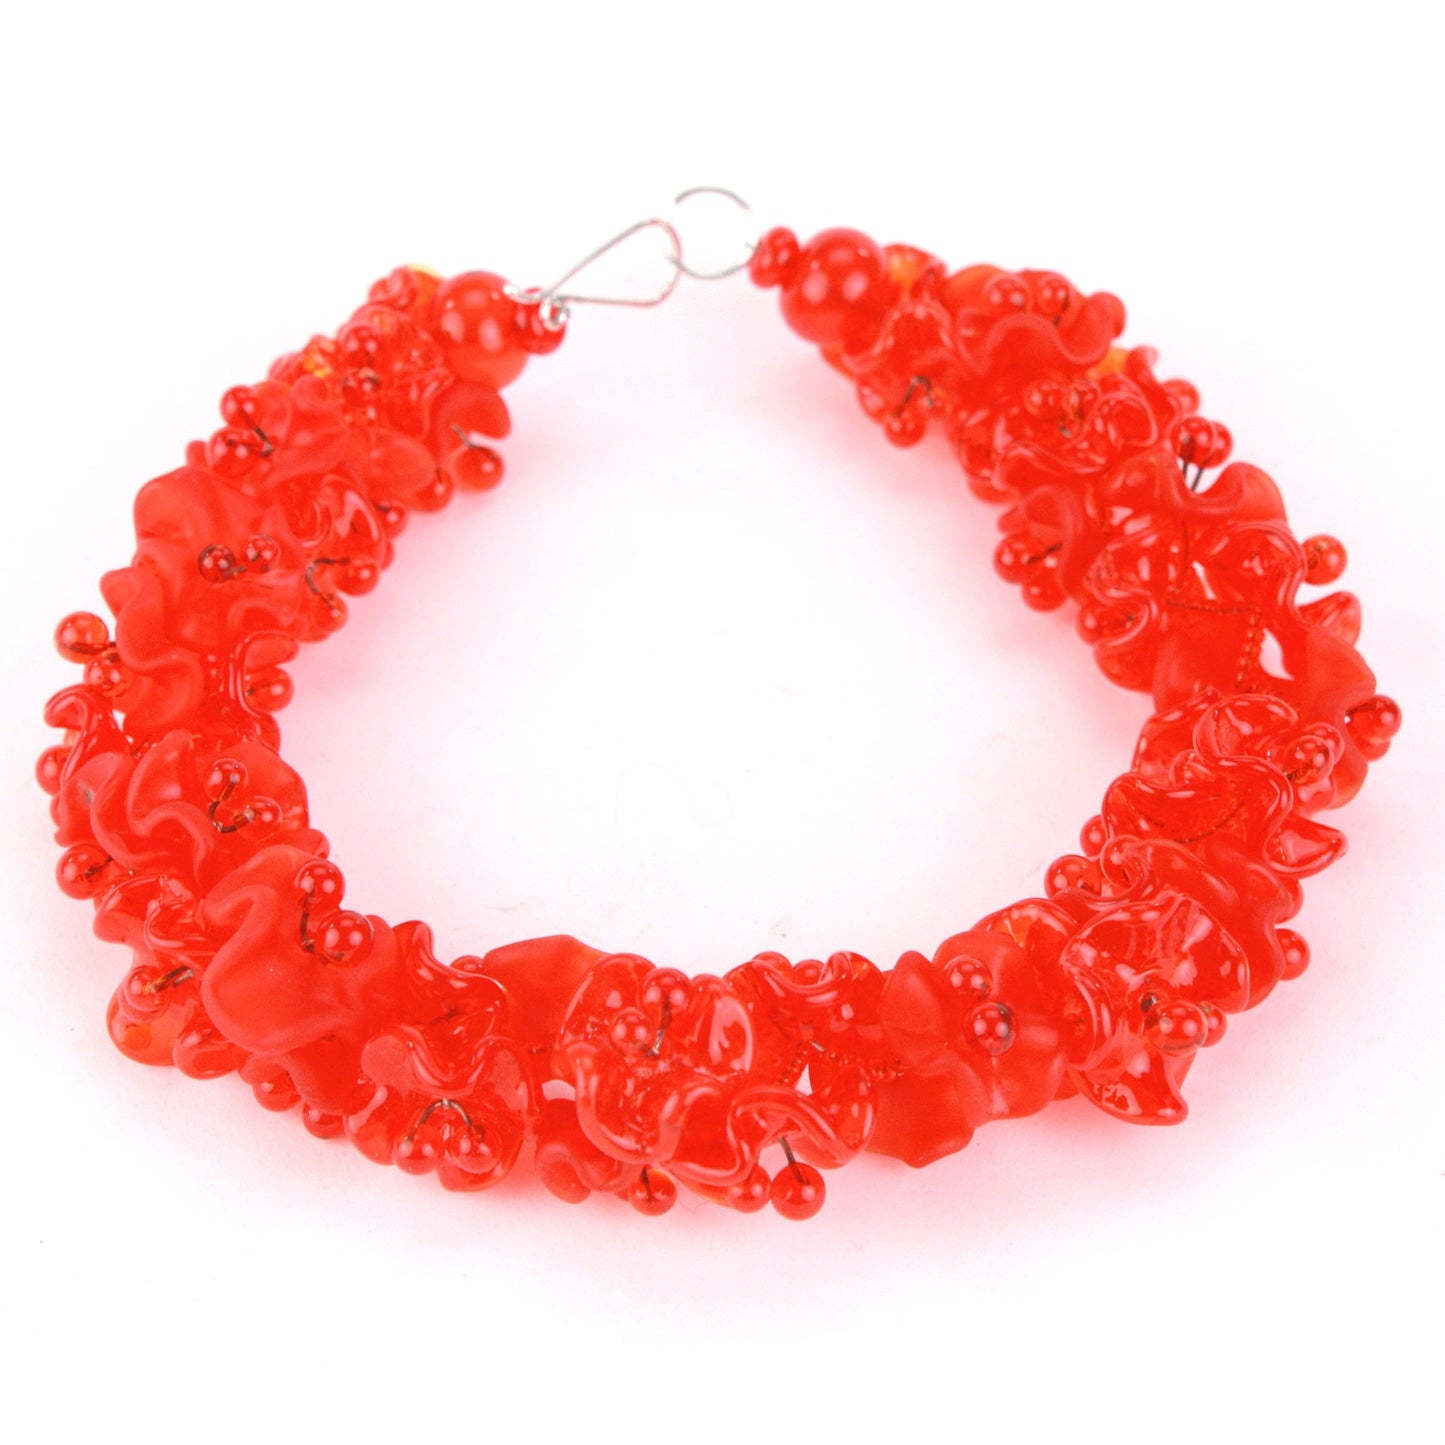 Florette necklace in orange